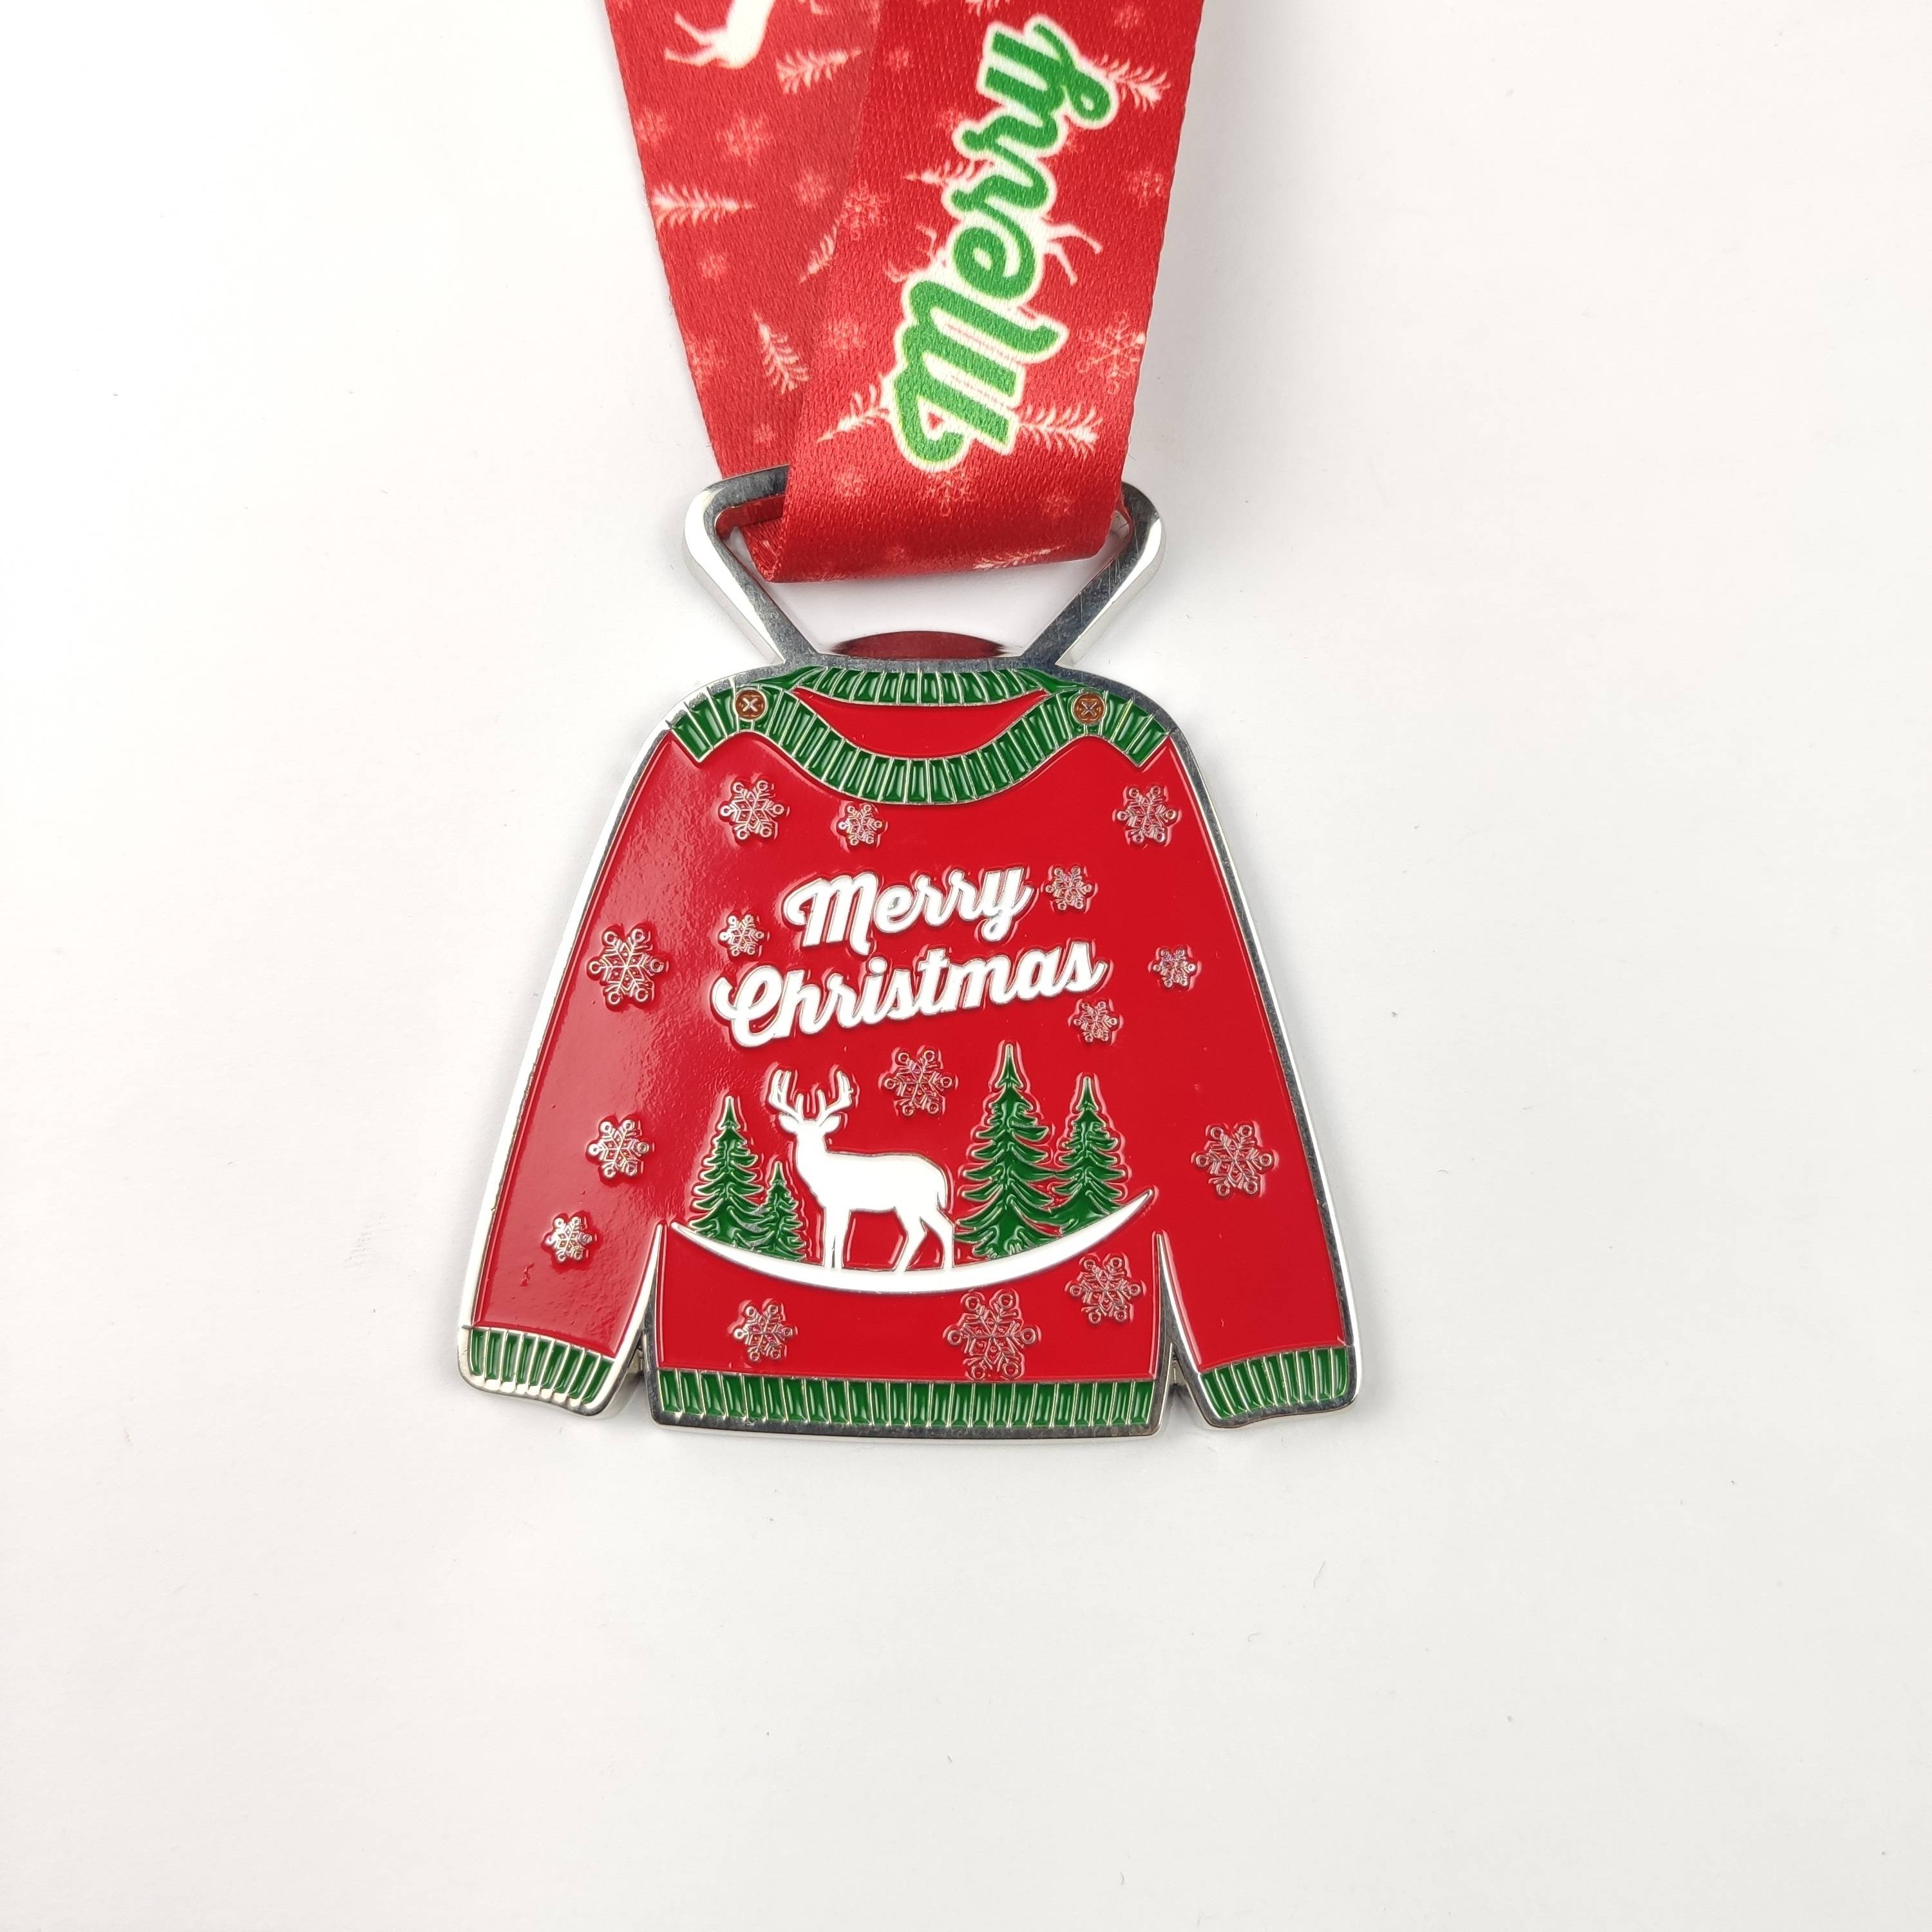 New Fashion Design for Custom Finisher Medals - Manufacturer OEM ODM Free Design Custom Themed Ugly Christmas Sweater Medal – Global Art Gifts